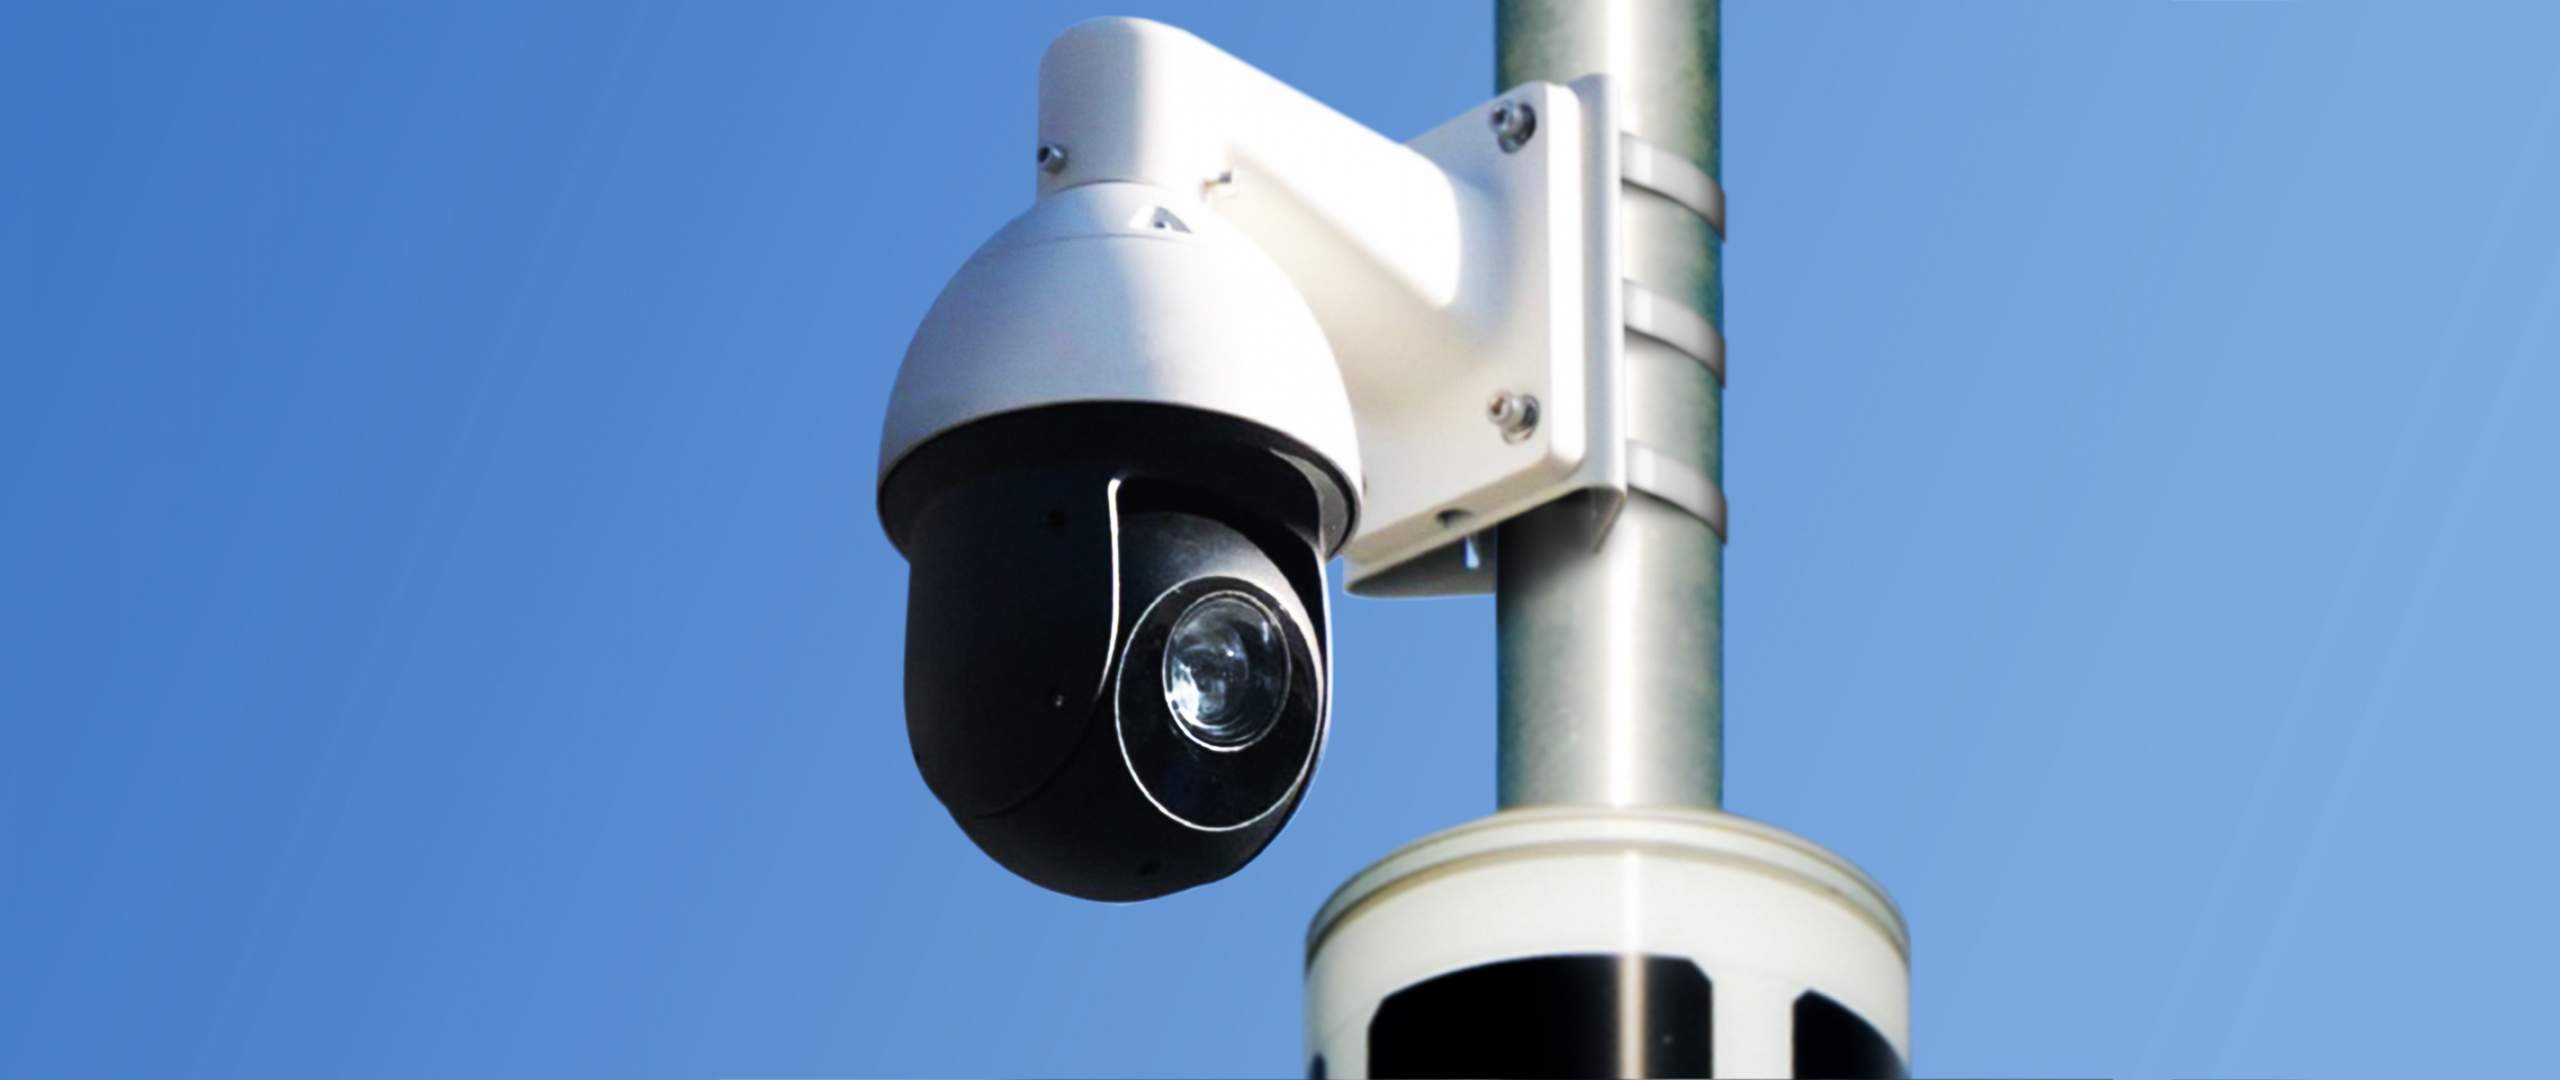 Soluxio zonnemast met CCTV bewakingscamera